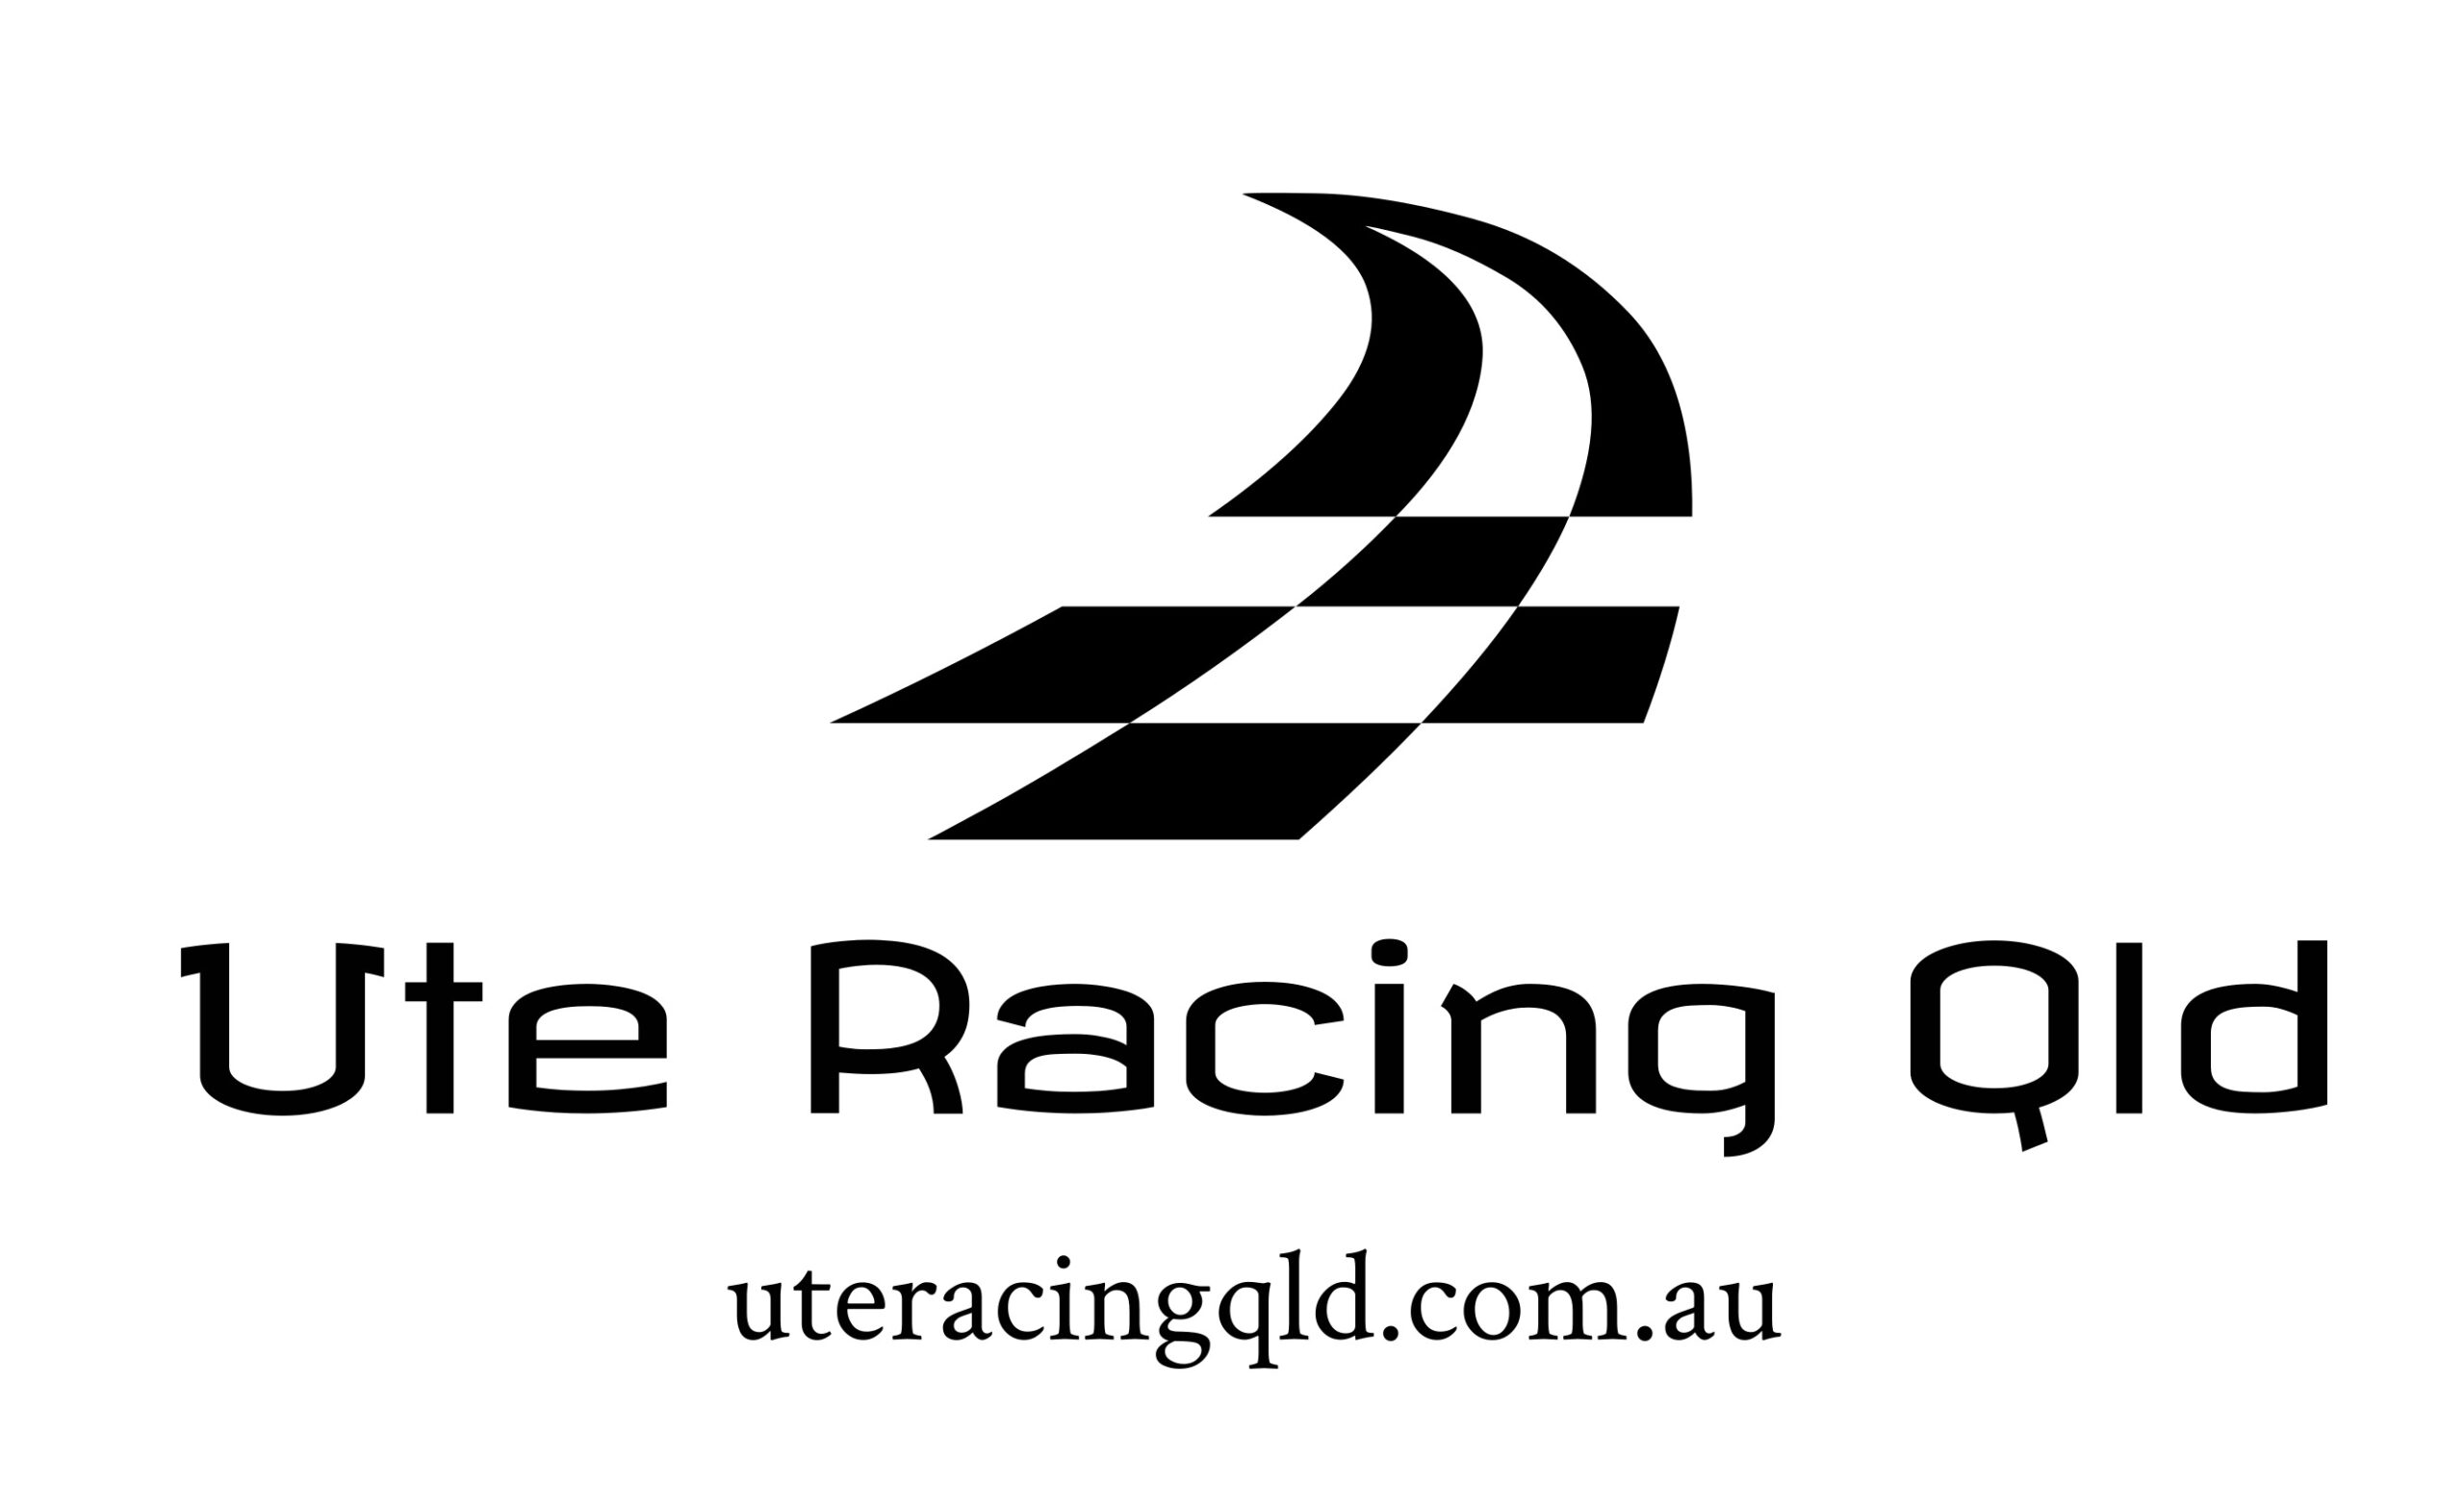 Ute Racing Qld